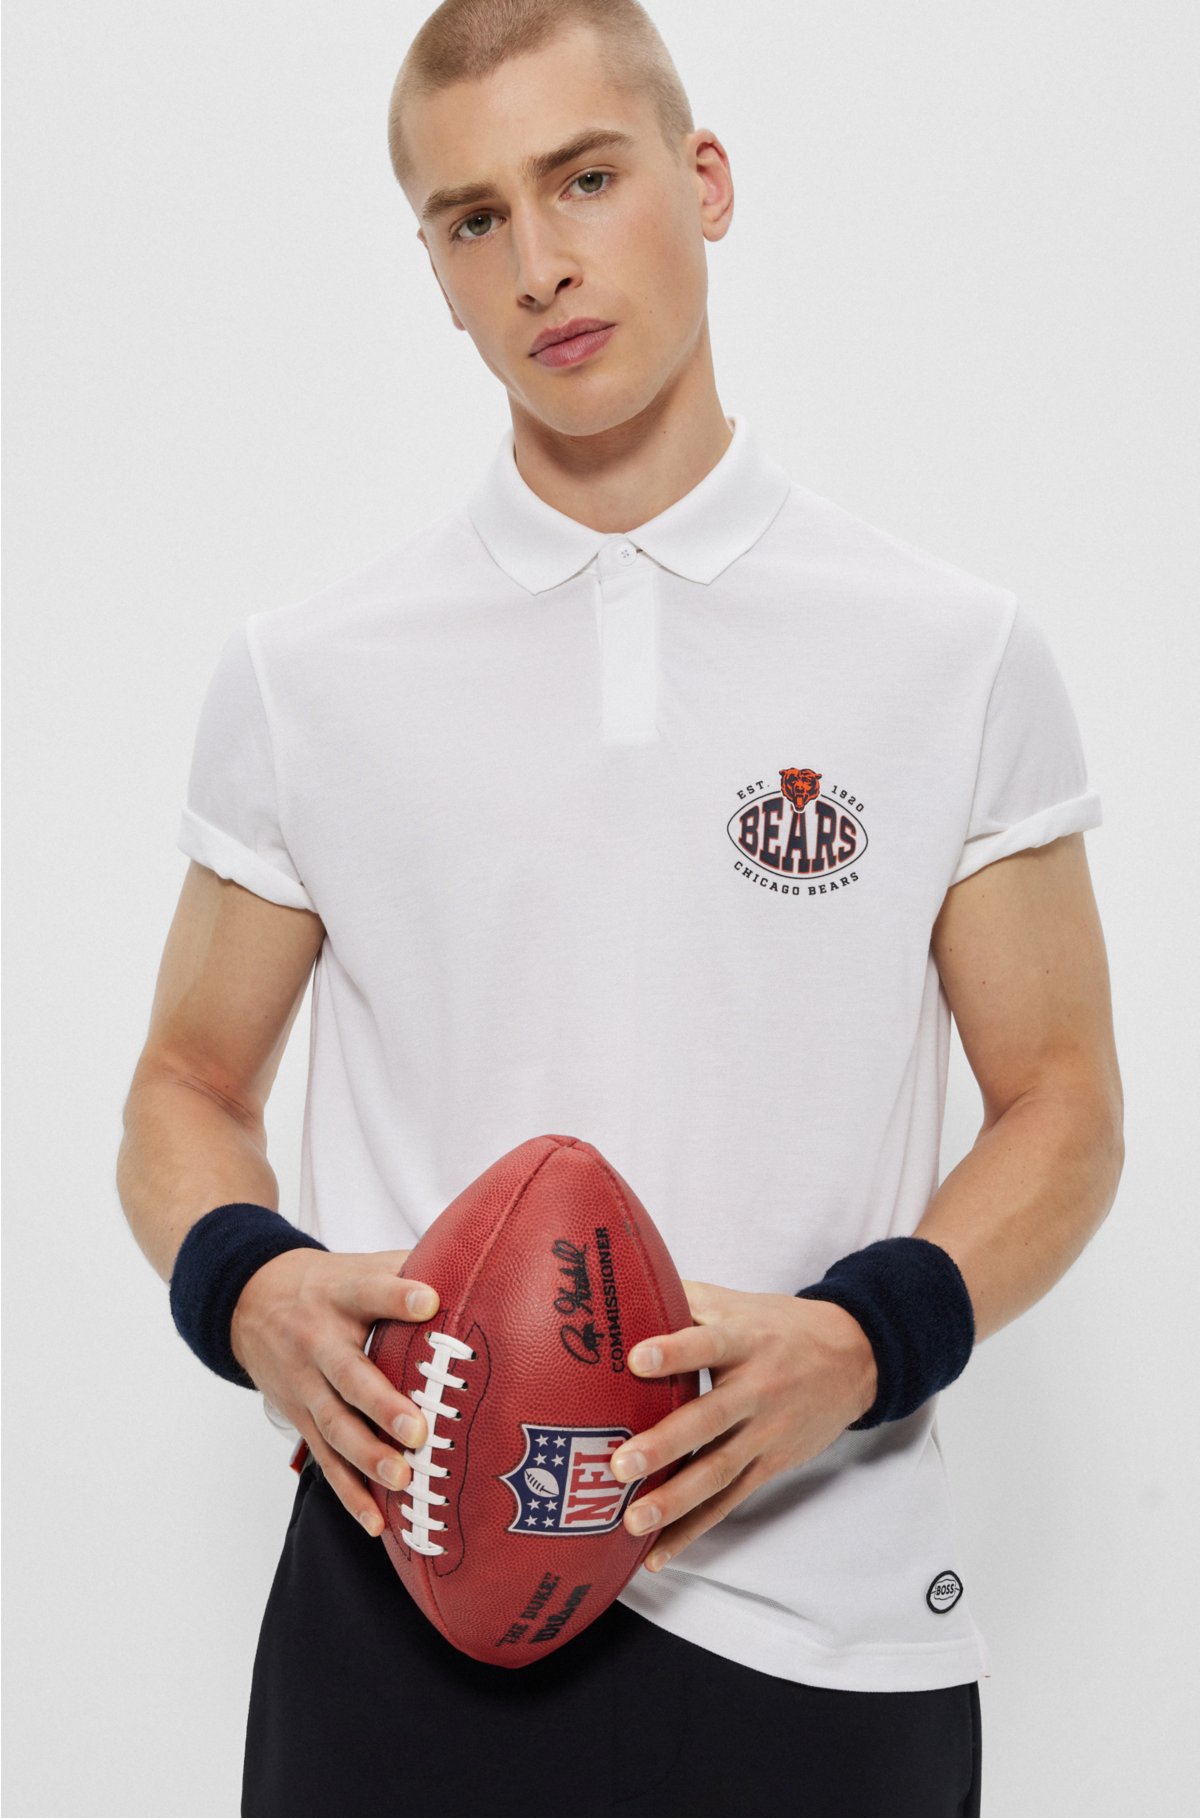 BOSS x NFL cotton-piqué polo shirt with collaborative branding, Bears